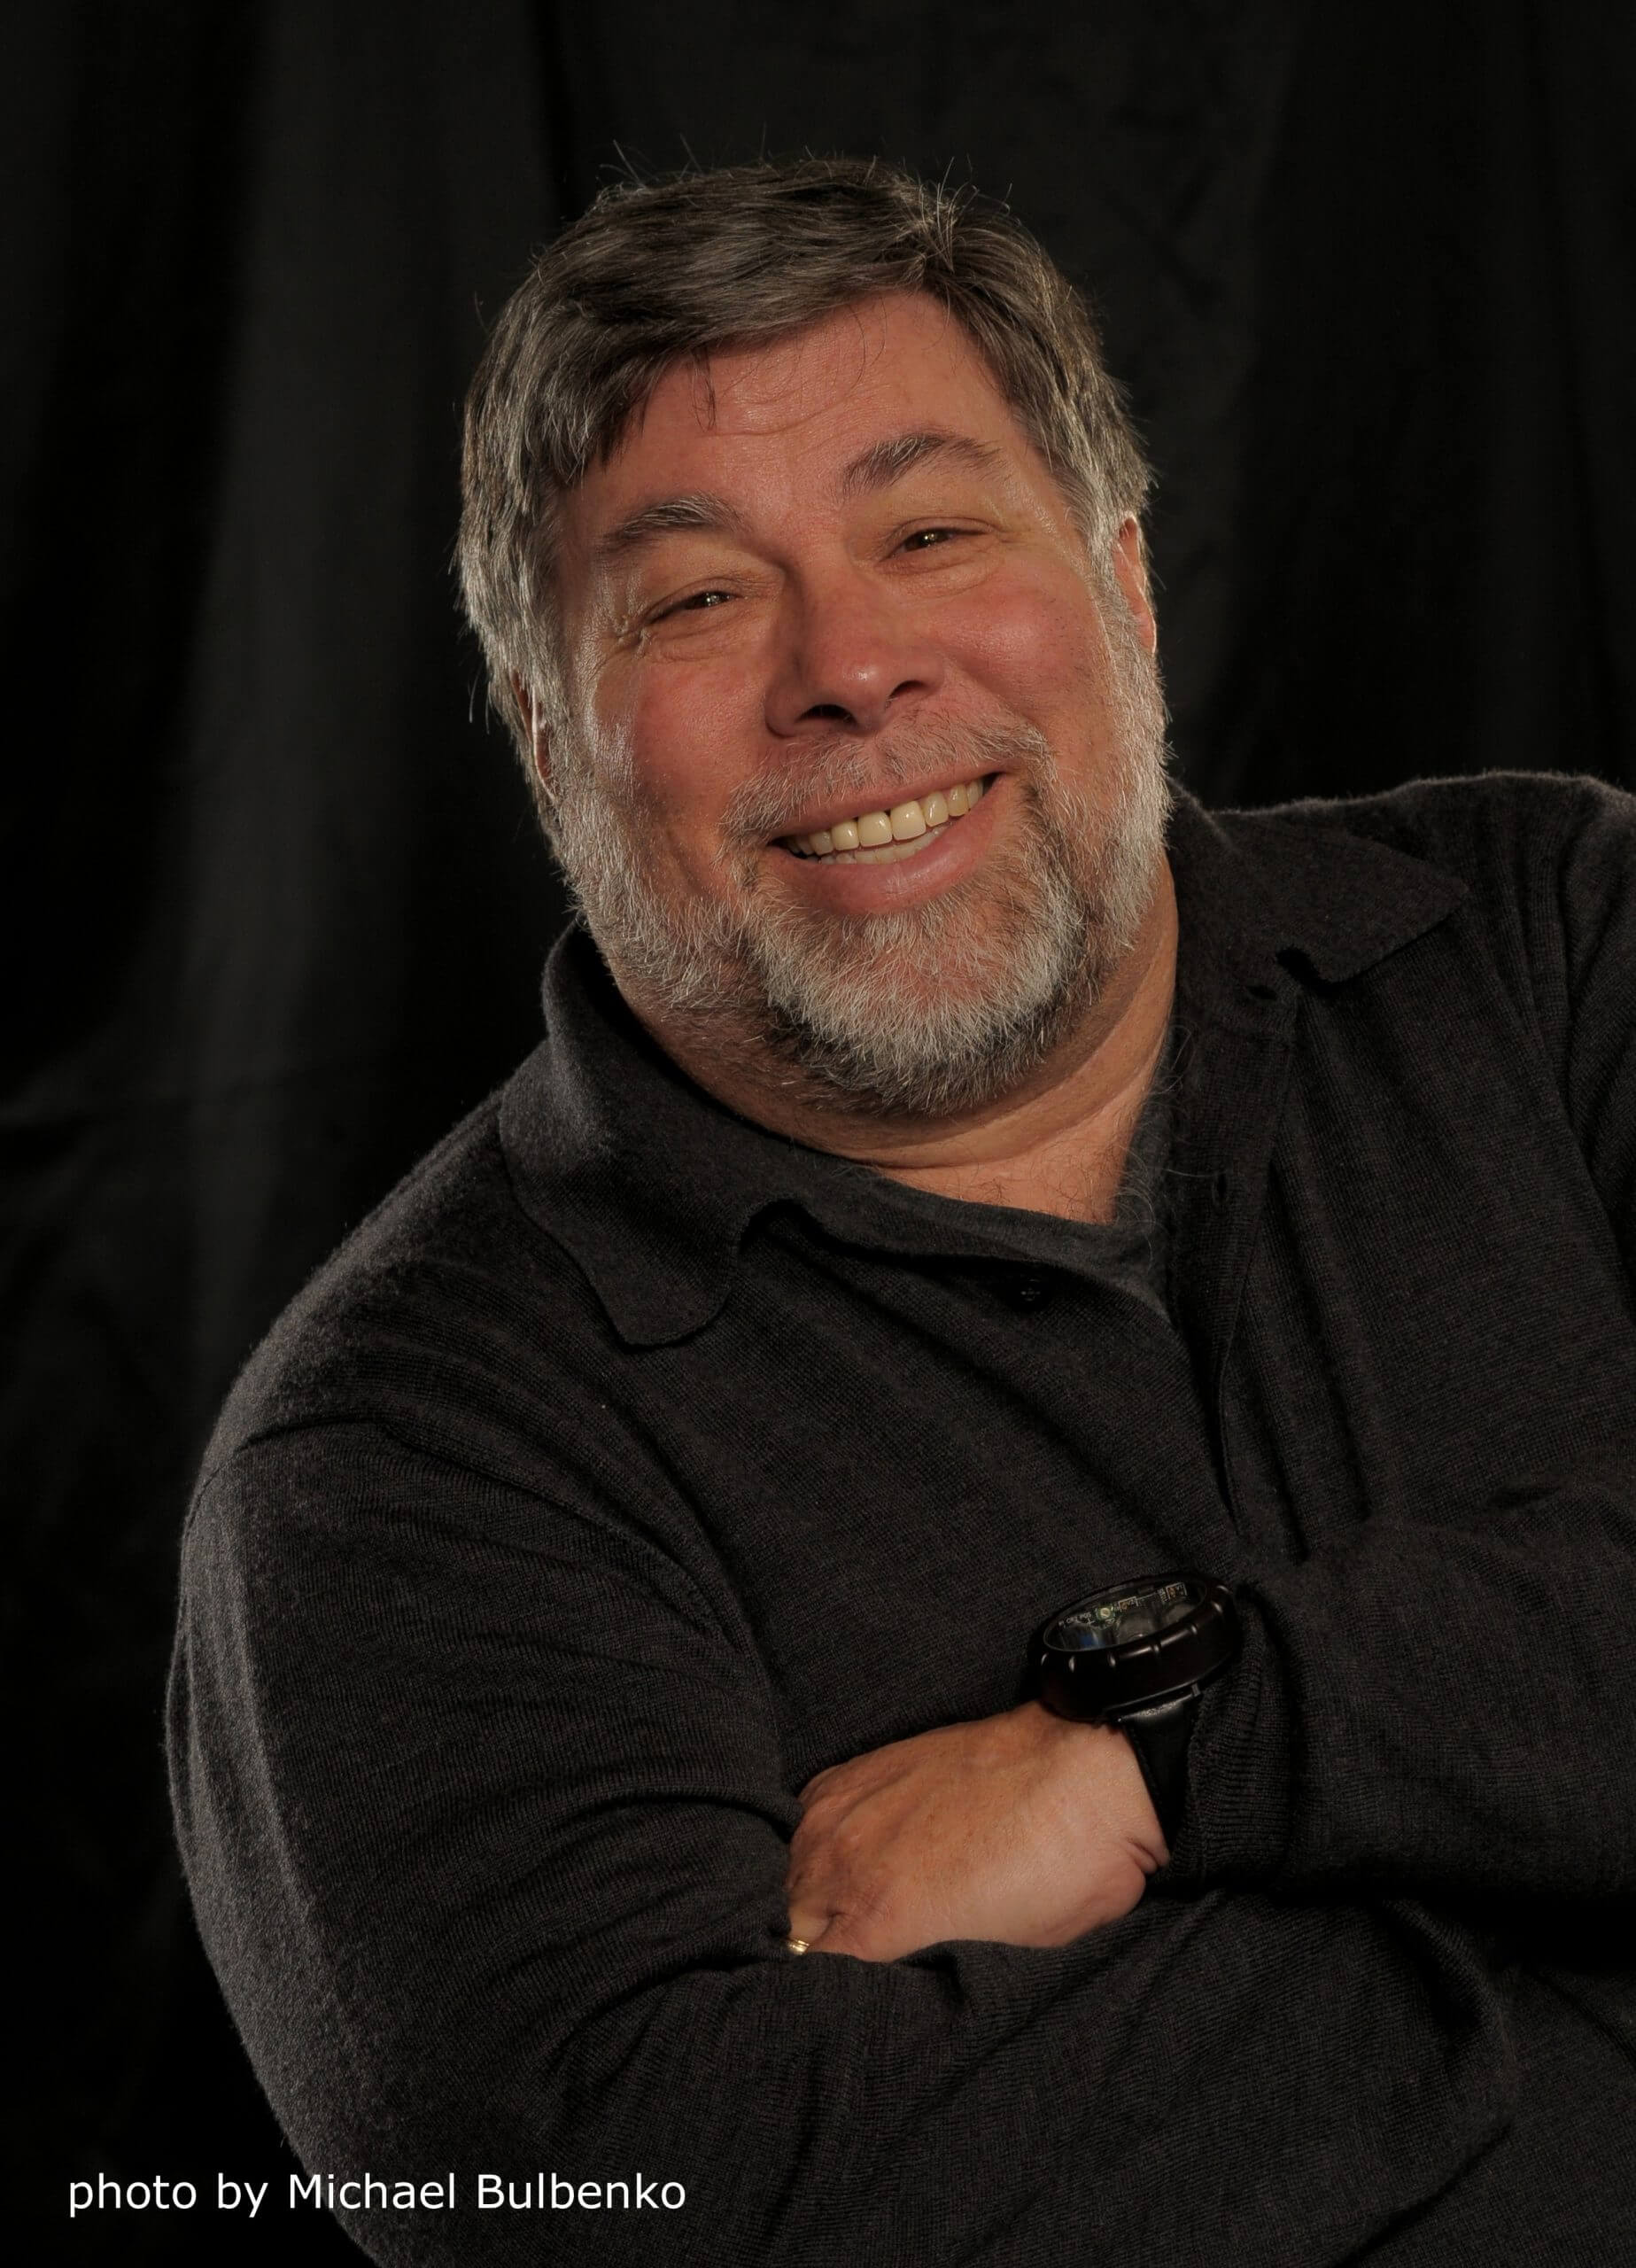 Steve Wozniak to Speak at Annual GCC Financial Forum